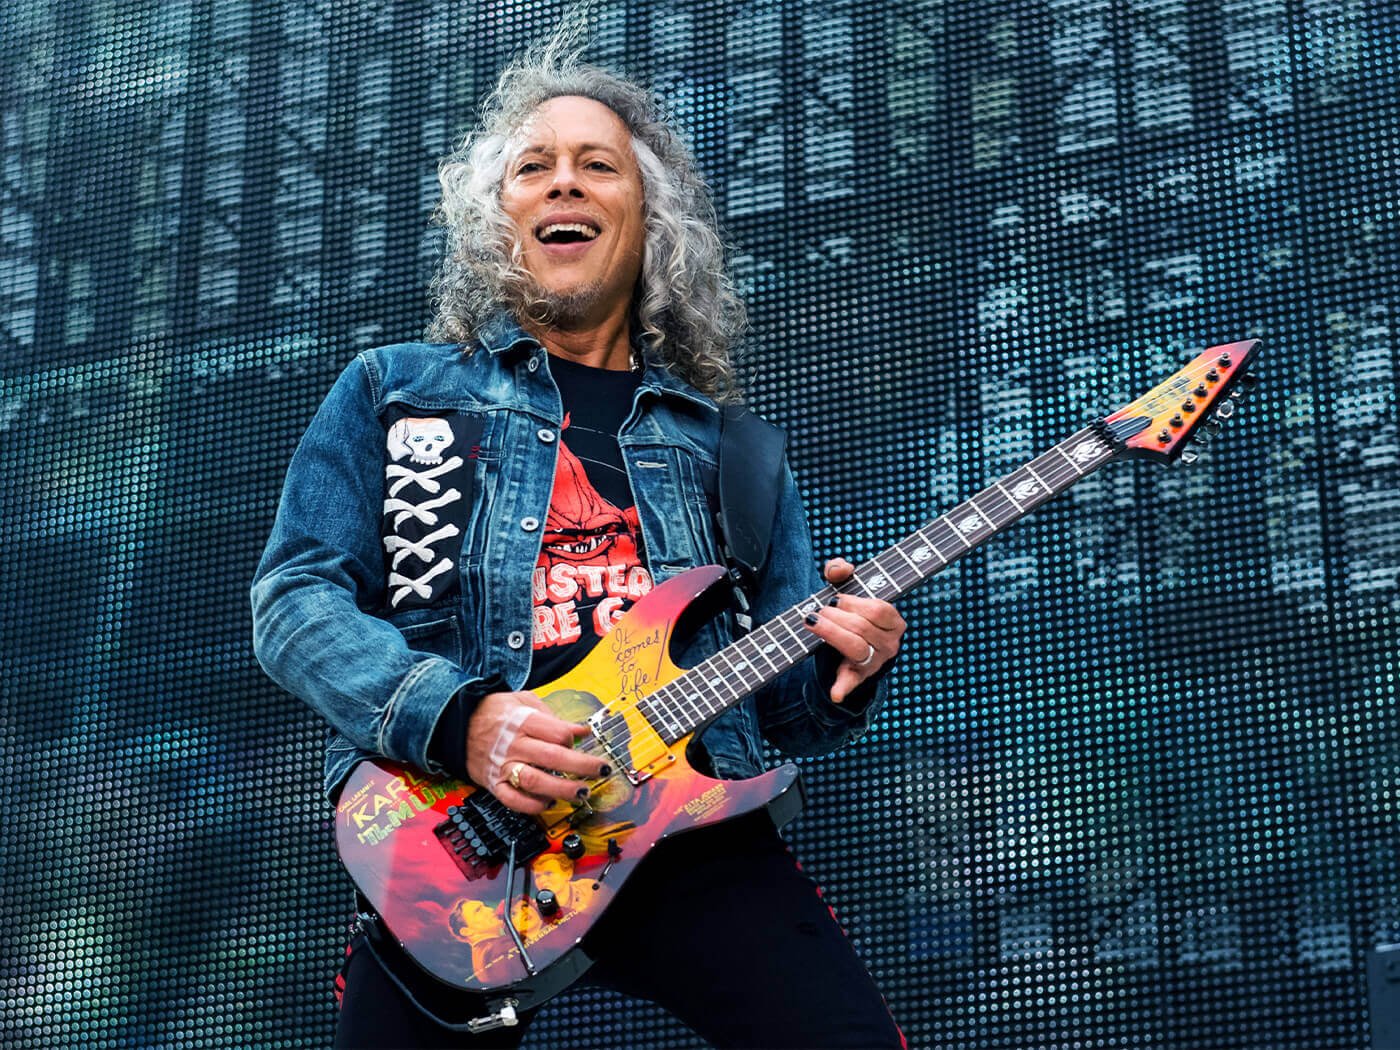 Metallica's guitarist Kirk Hammett announces his solo album release date